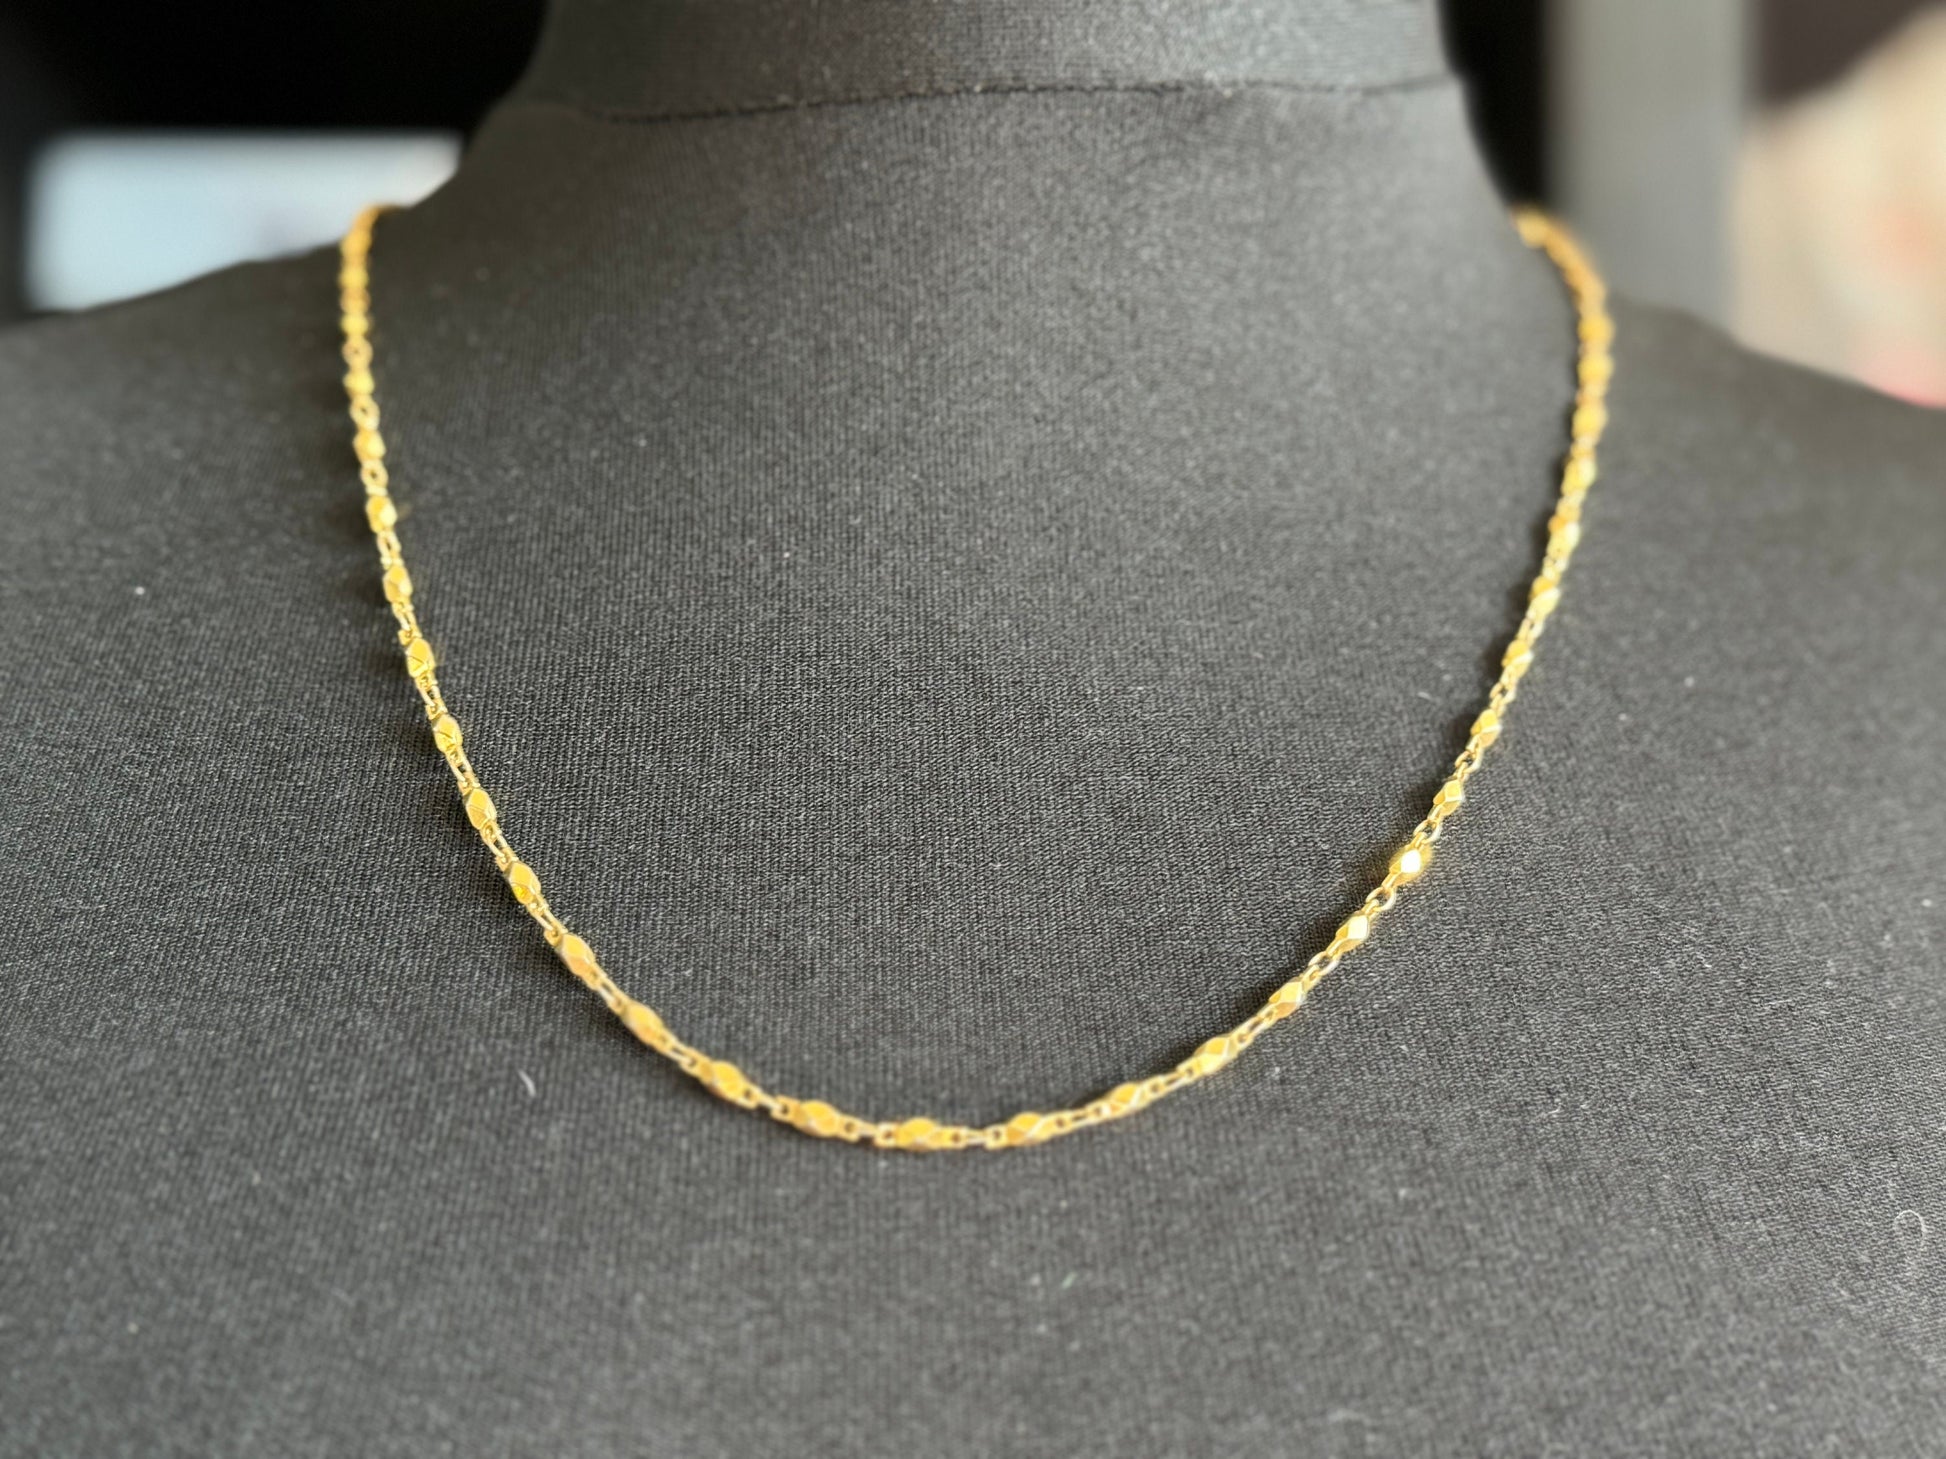 Signed Napier 60cm Vintage gold fancy link chain necklace